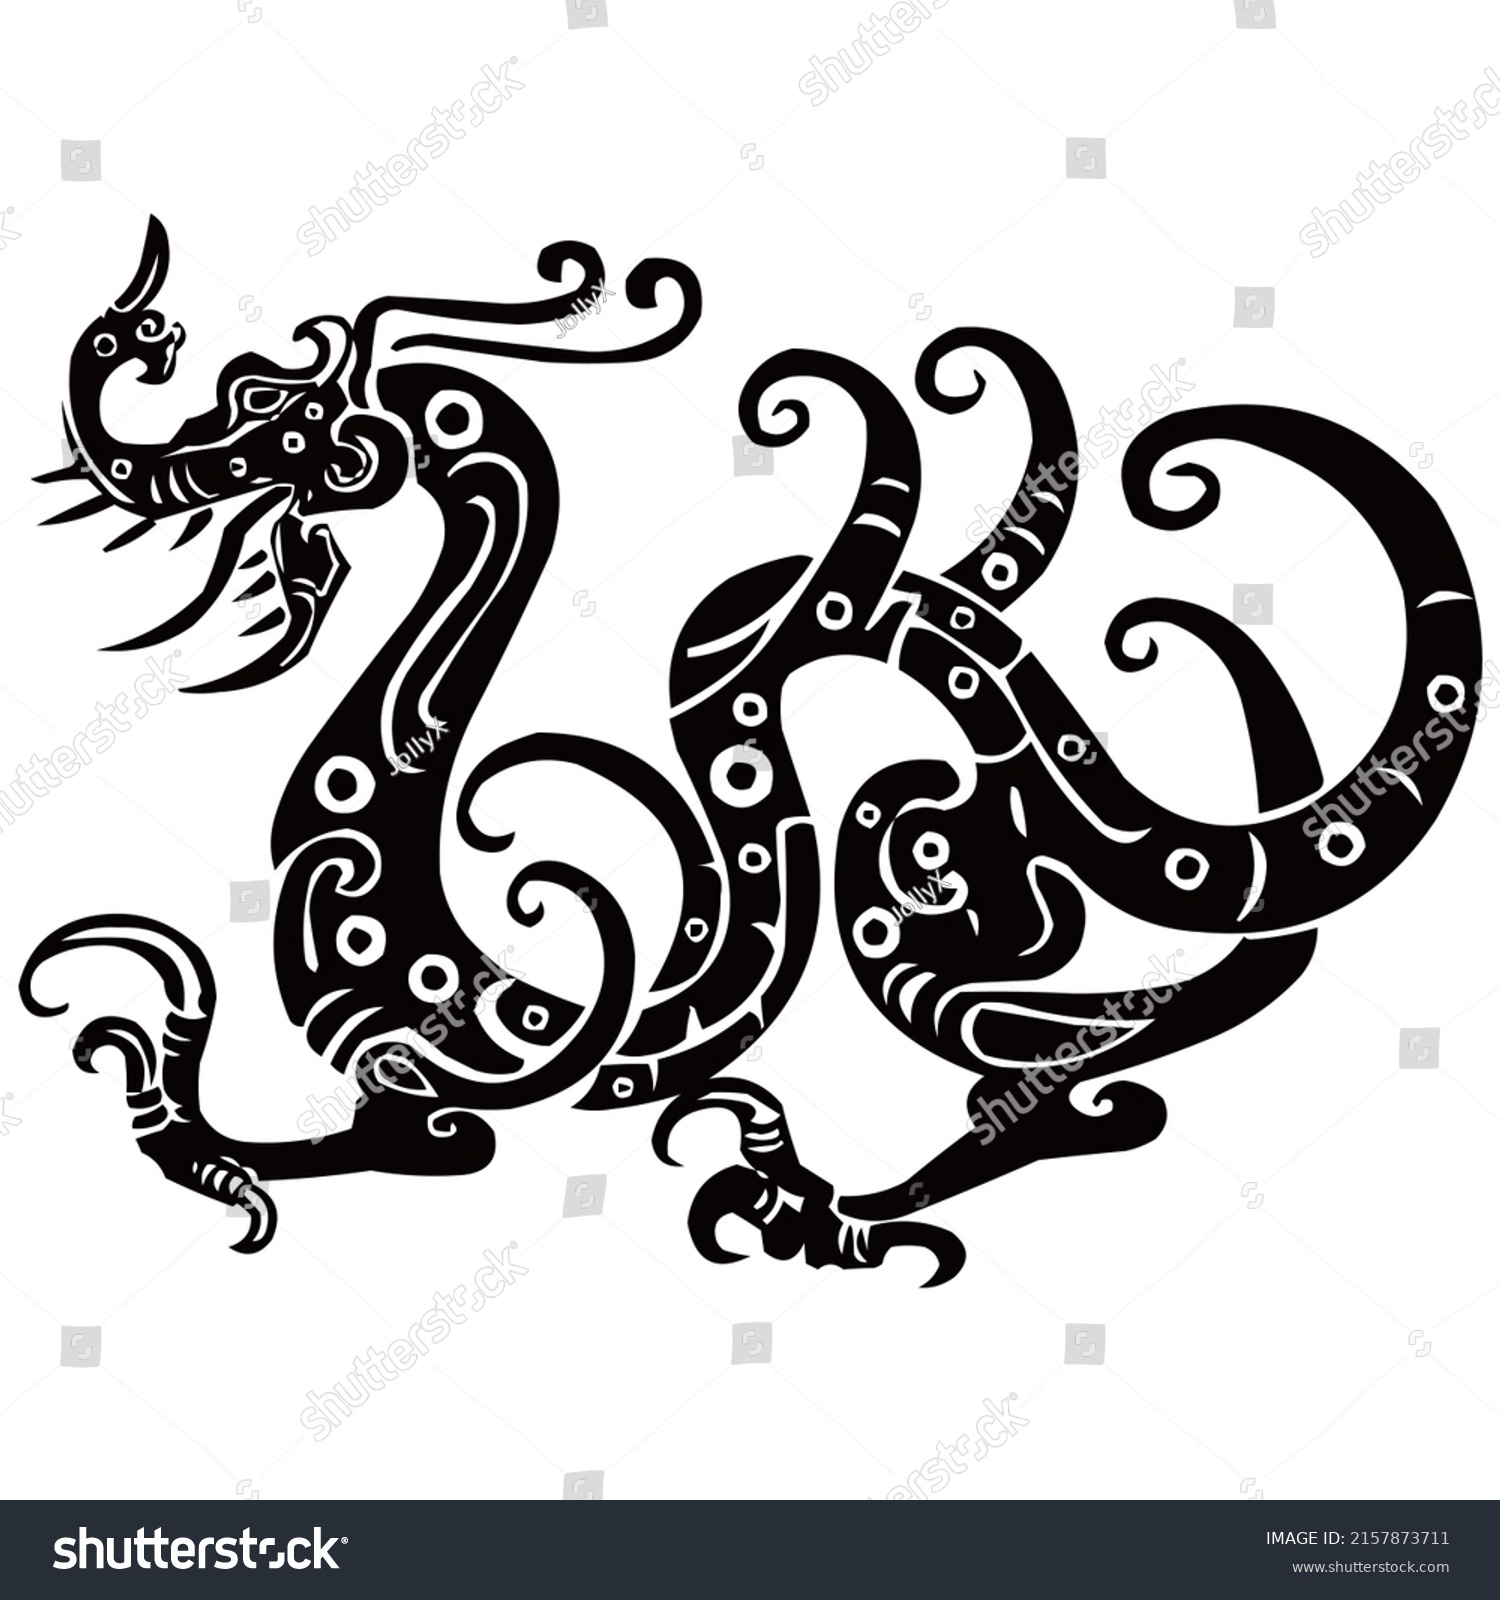 Dragon Logo Designed Based On Impression Stock Illustration 2157873711 ...